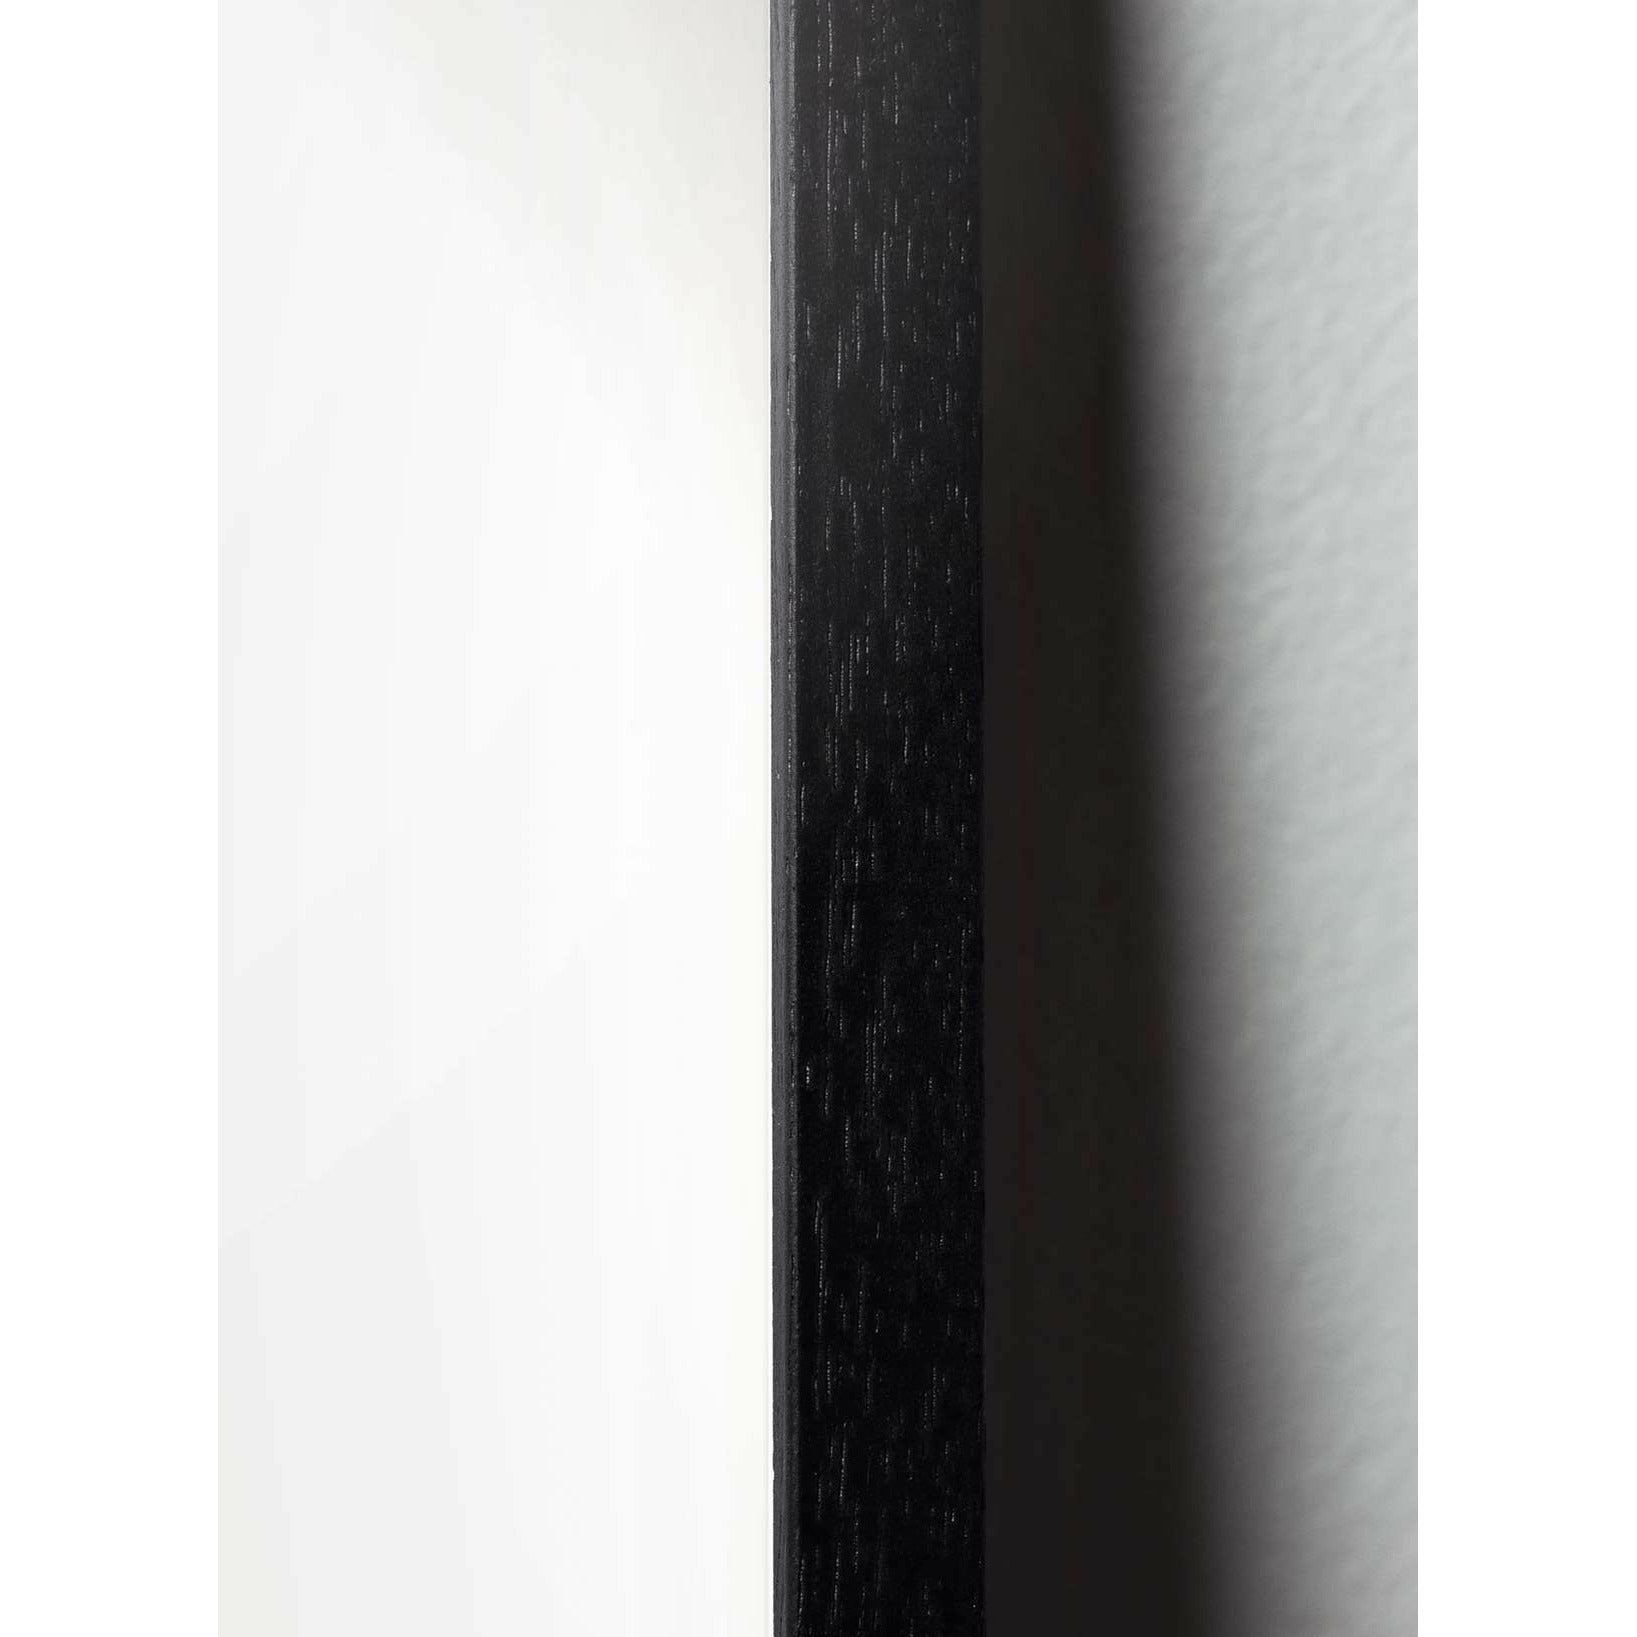 Póster clásico de BrainChild Flowerpot, marco en madera lacada negra de 70x100 cm, fondo negro